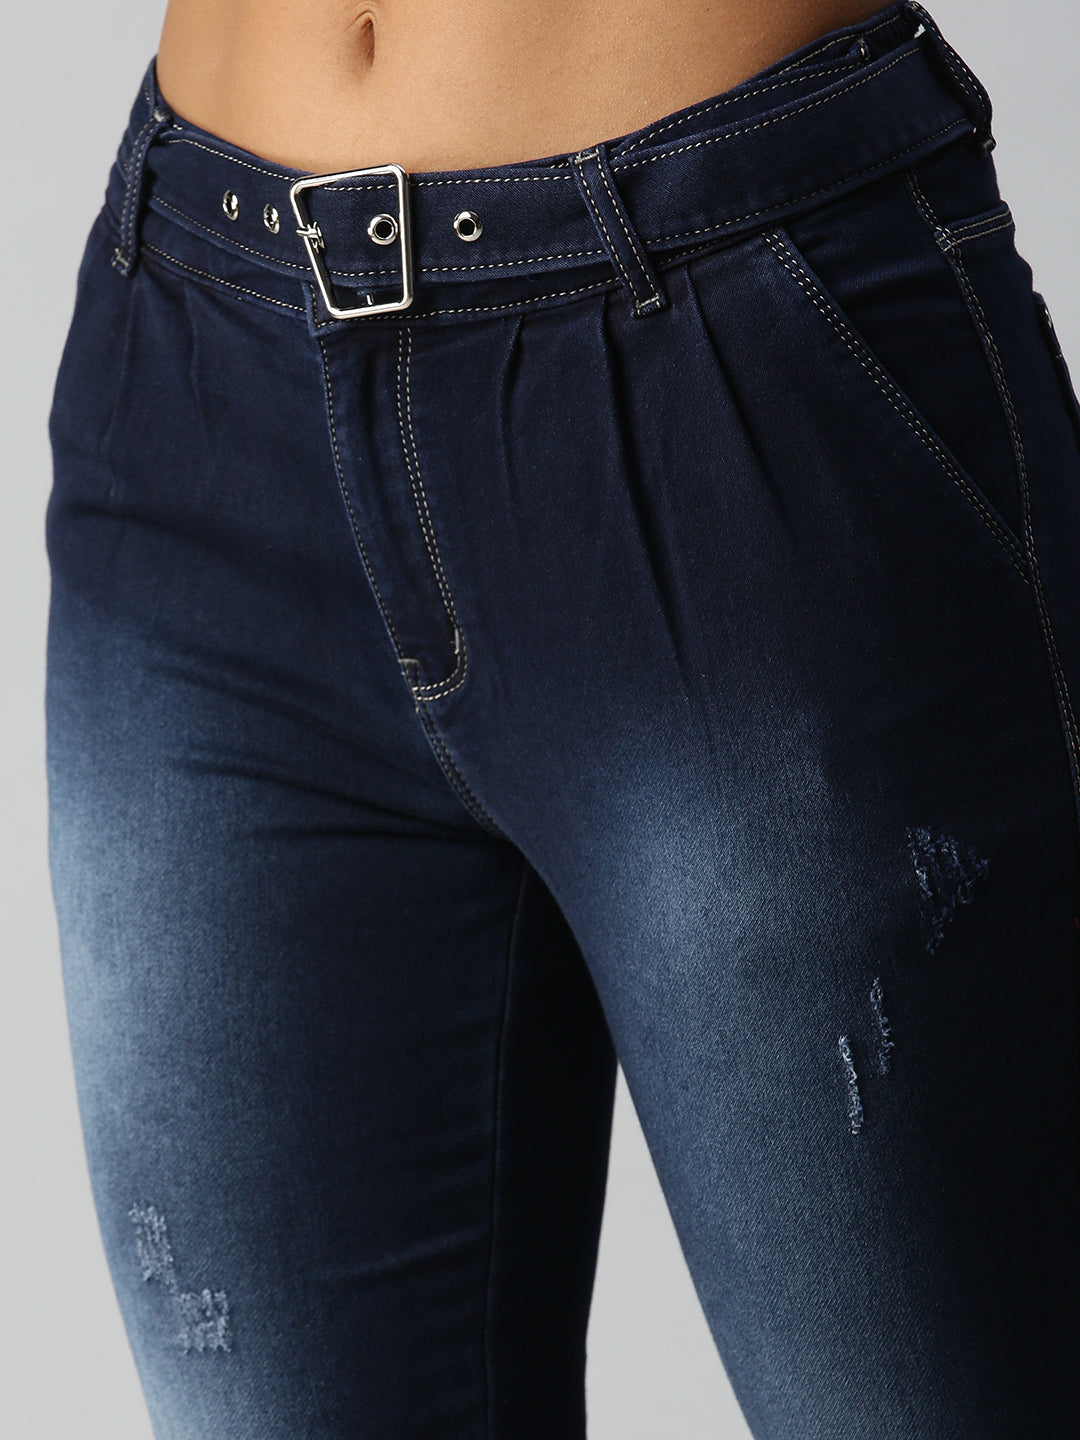 Women's Navy Blue Solid Denim Jeans